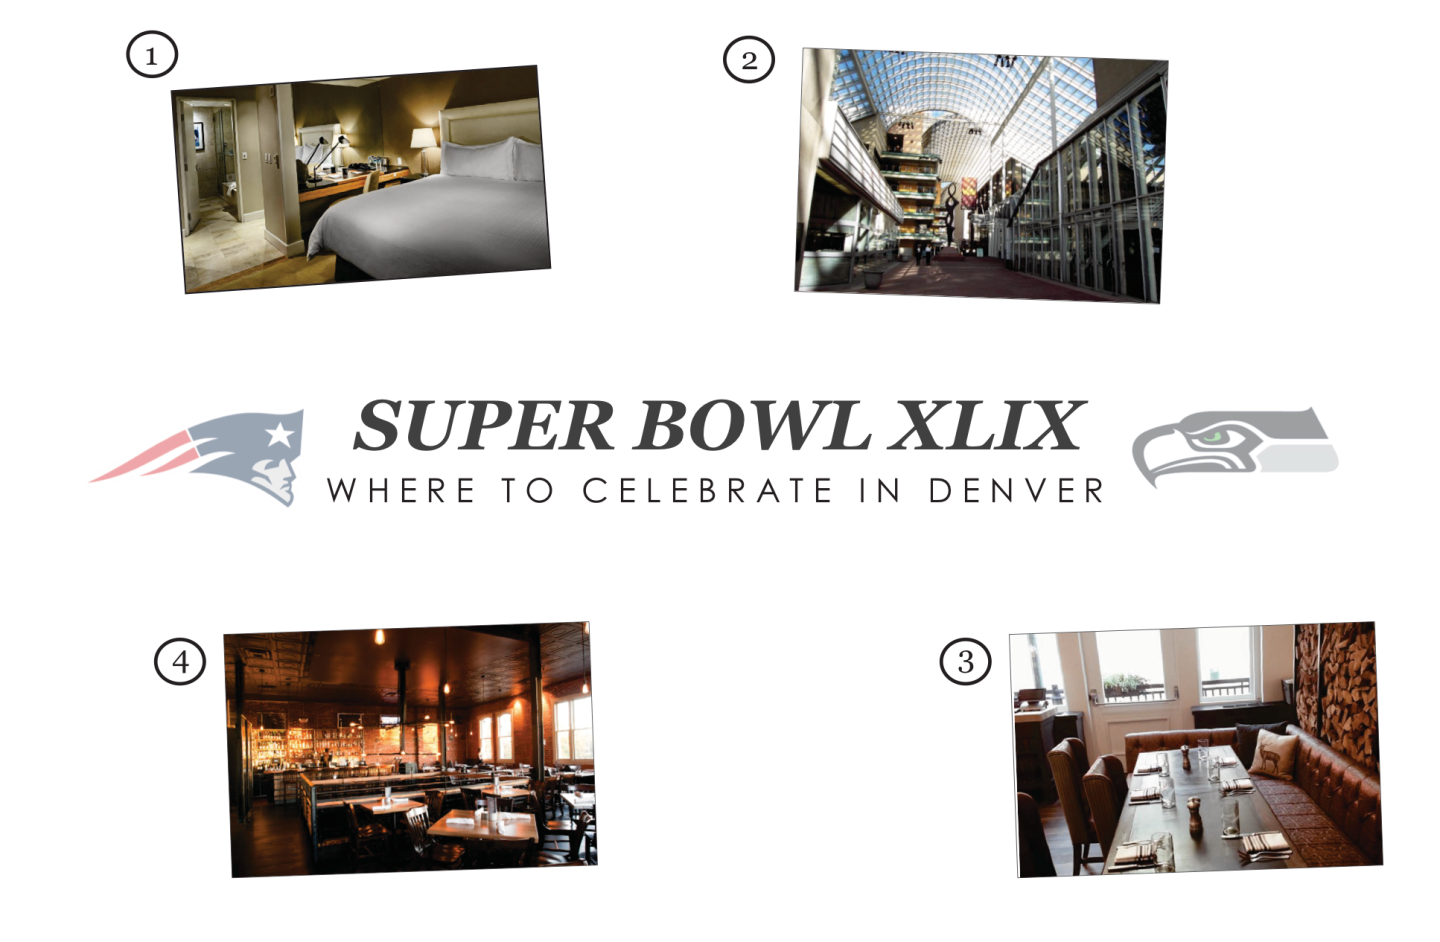 Where to Celebrate Super Bowl XLIX in Denver